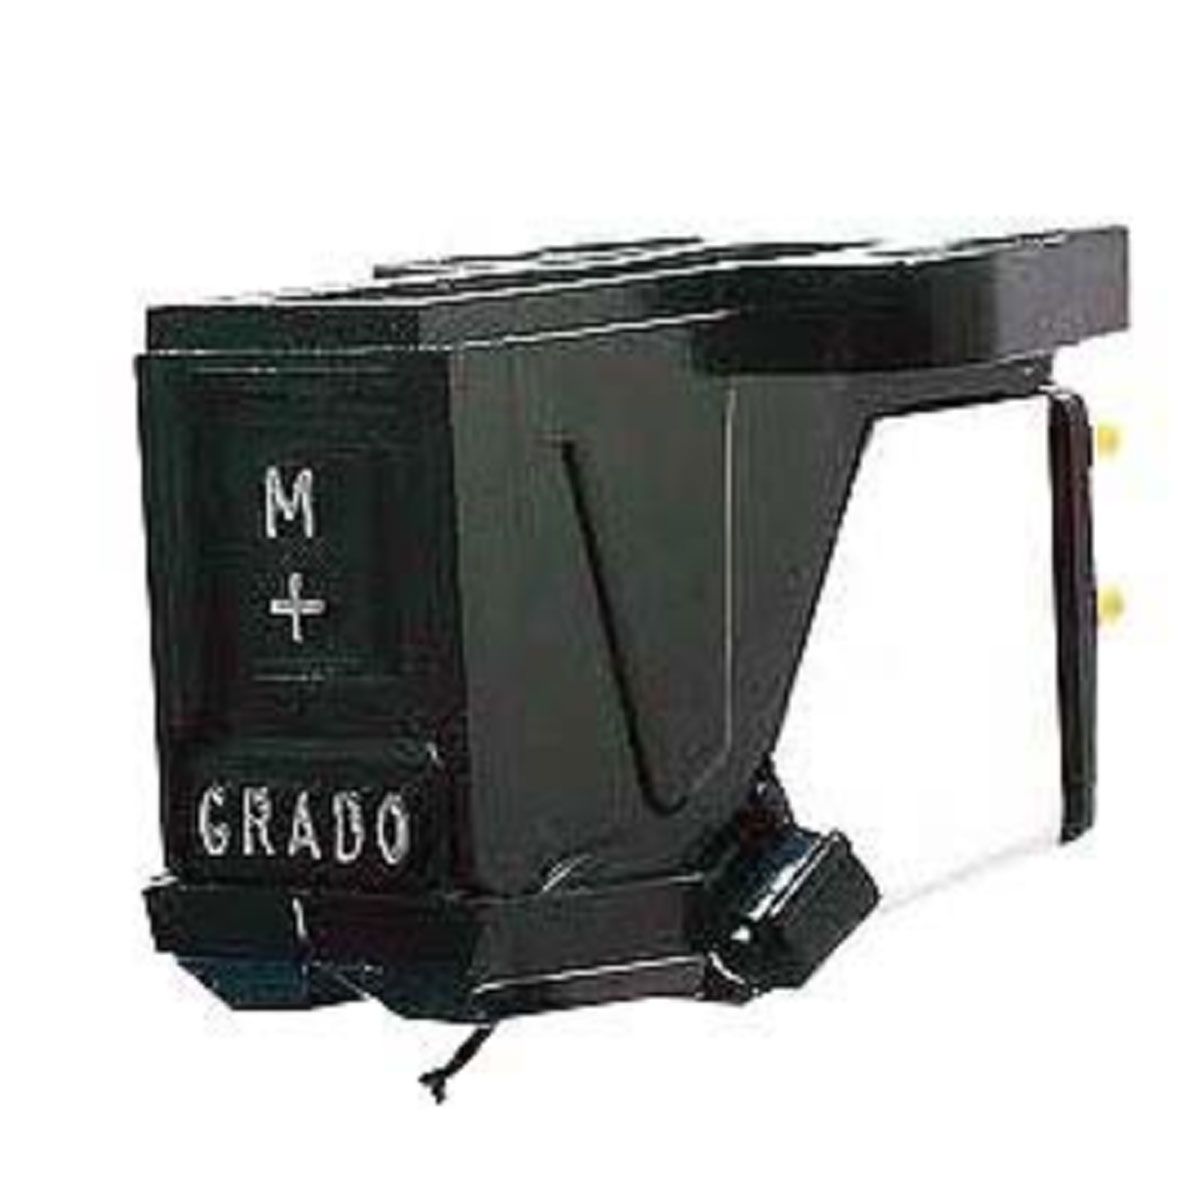 Grado Prestige Mono Phono Cartridge Model MC+, front view